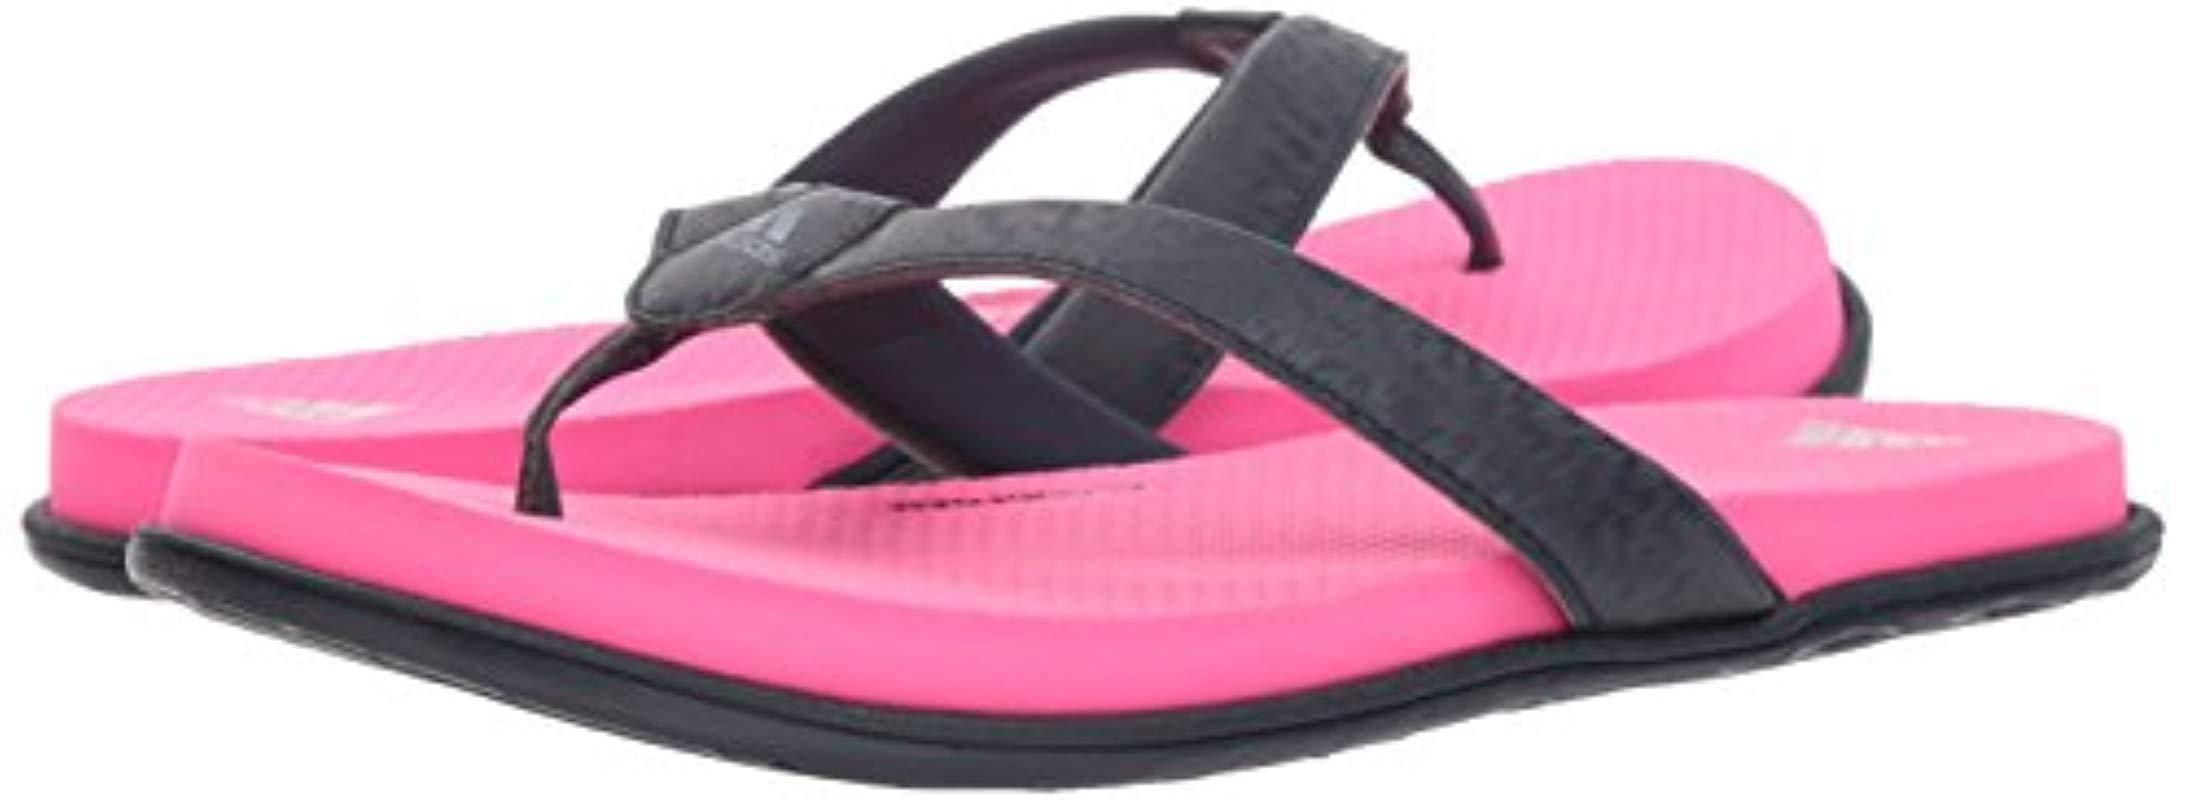 adidas Originals Rubber Cloudfoam Flip Flop Slide Sandal in Pink - Lyst